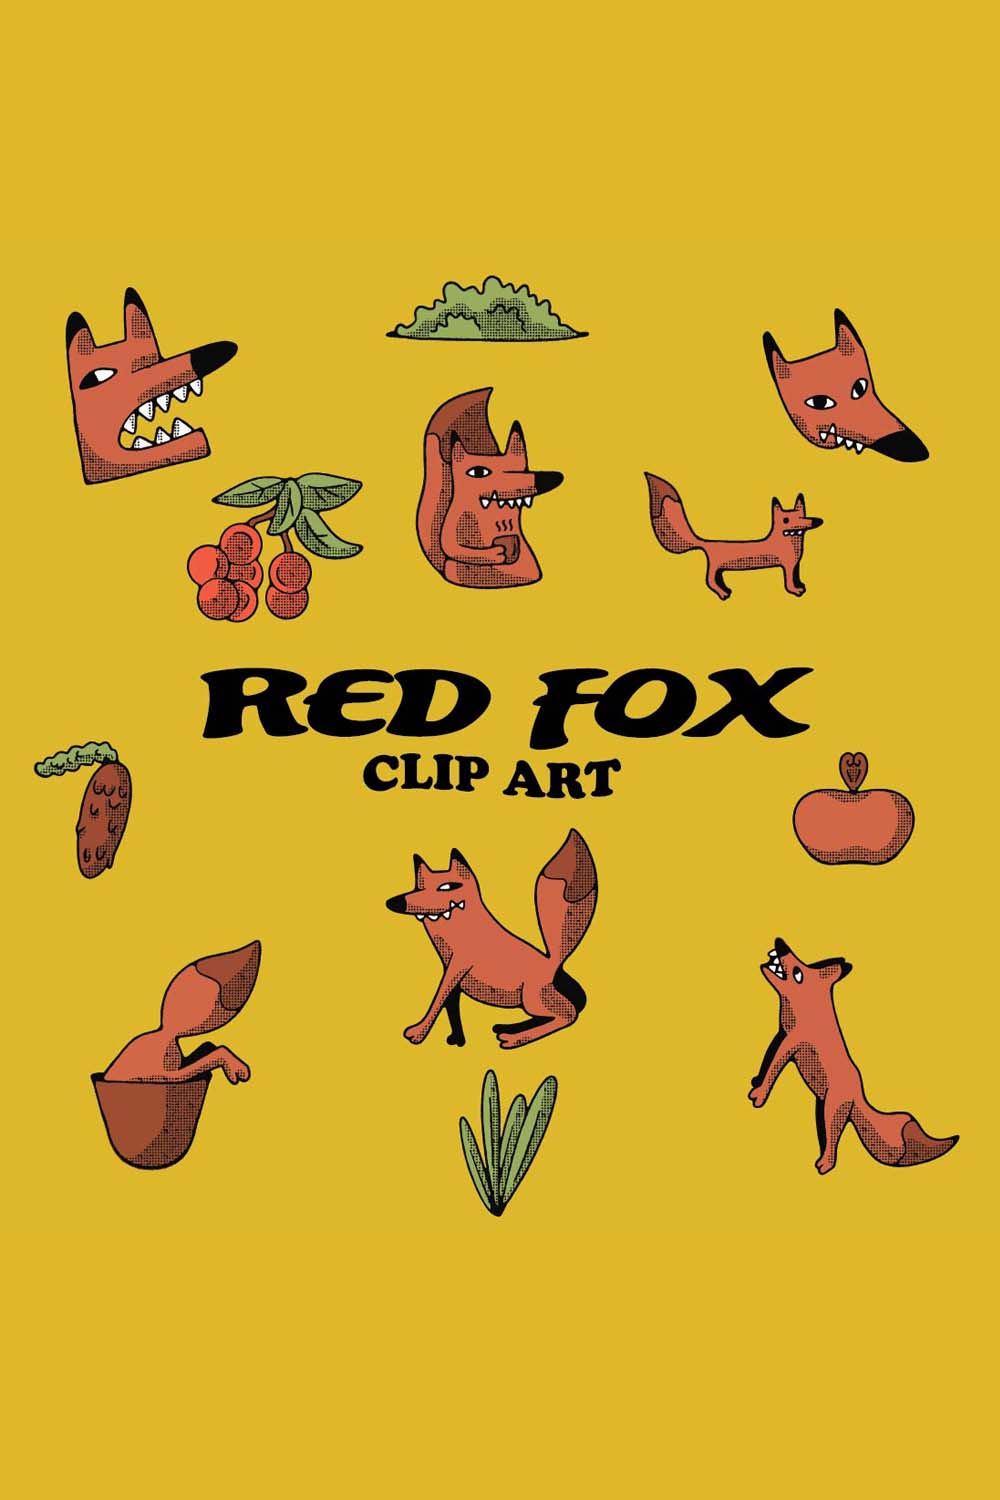 Red Fox Doodles Clip Art Pinterest Image.